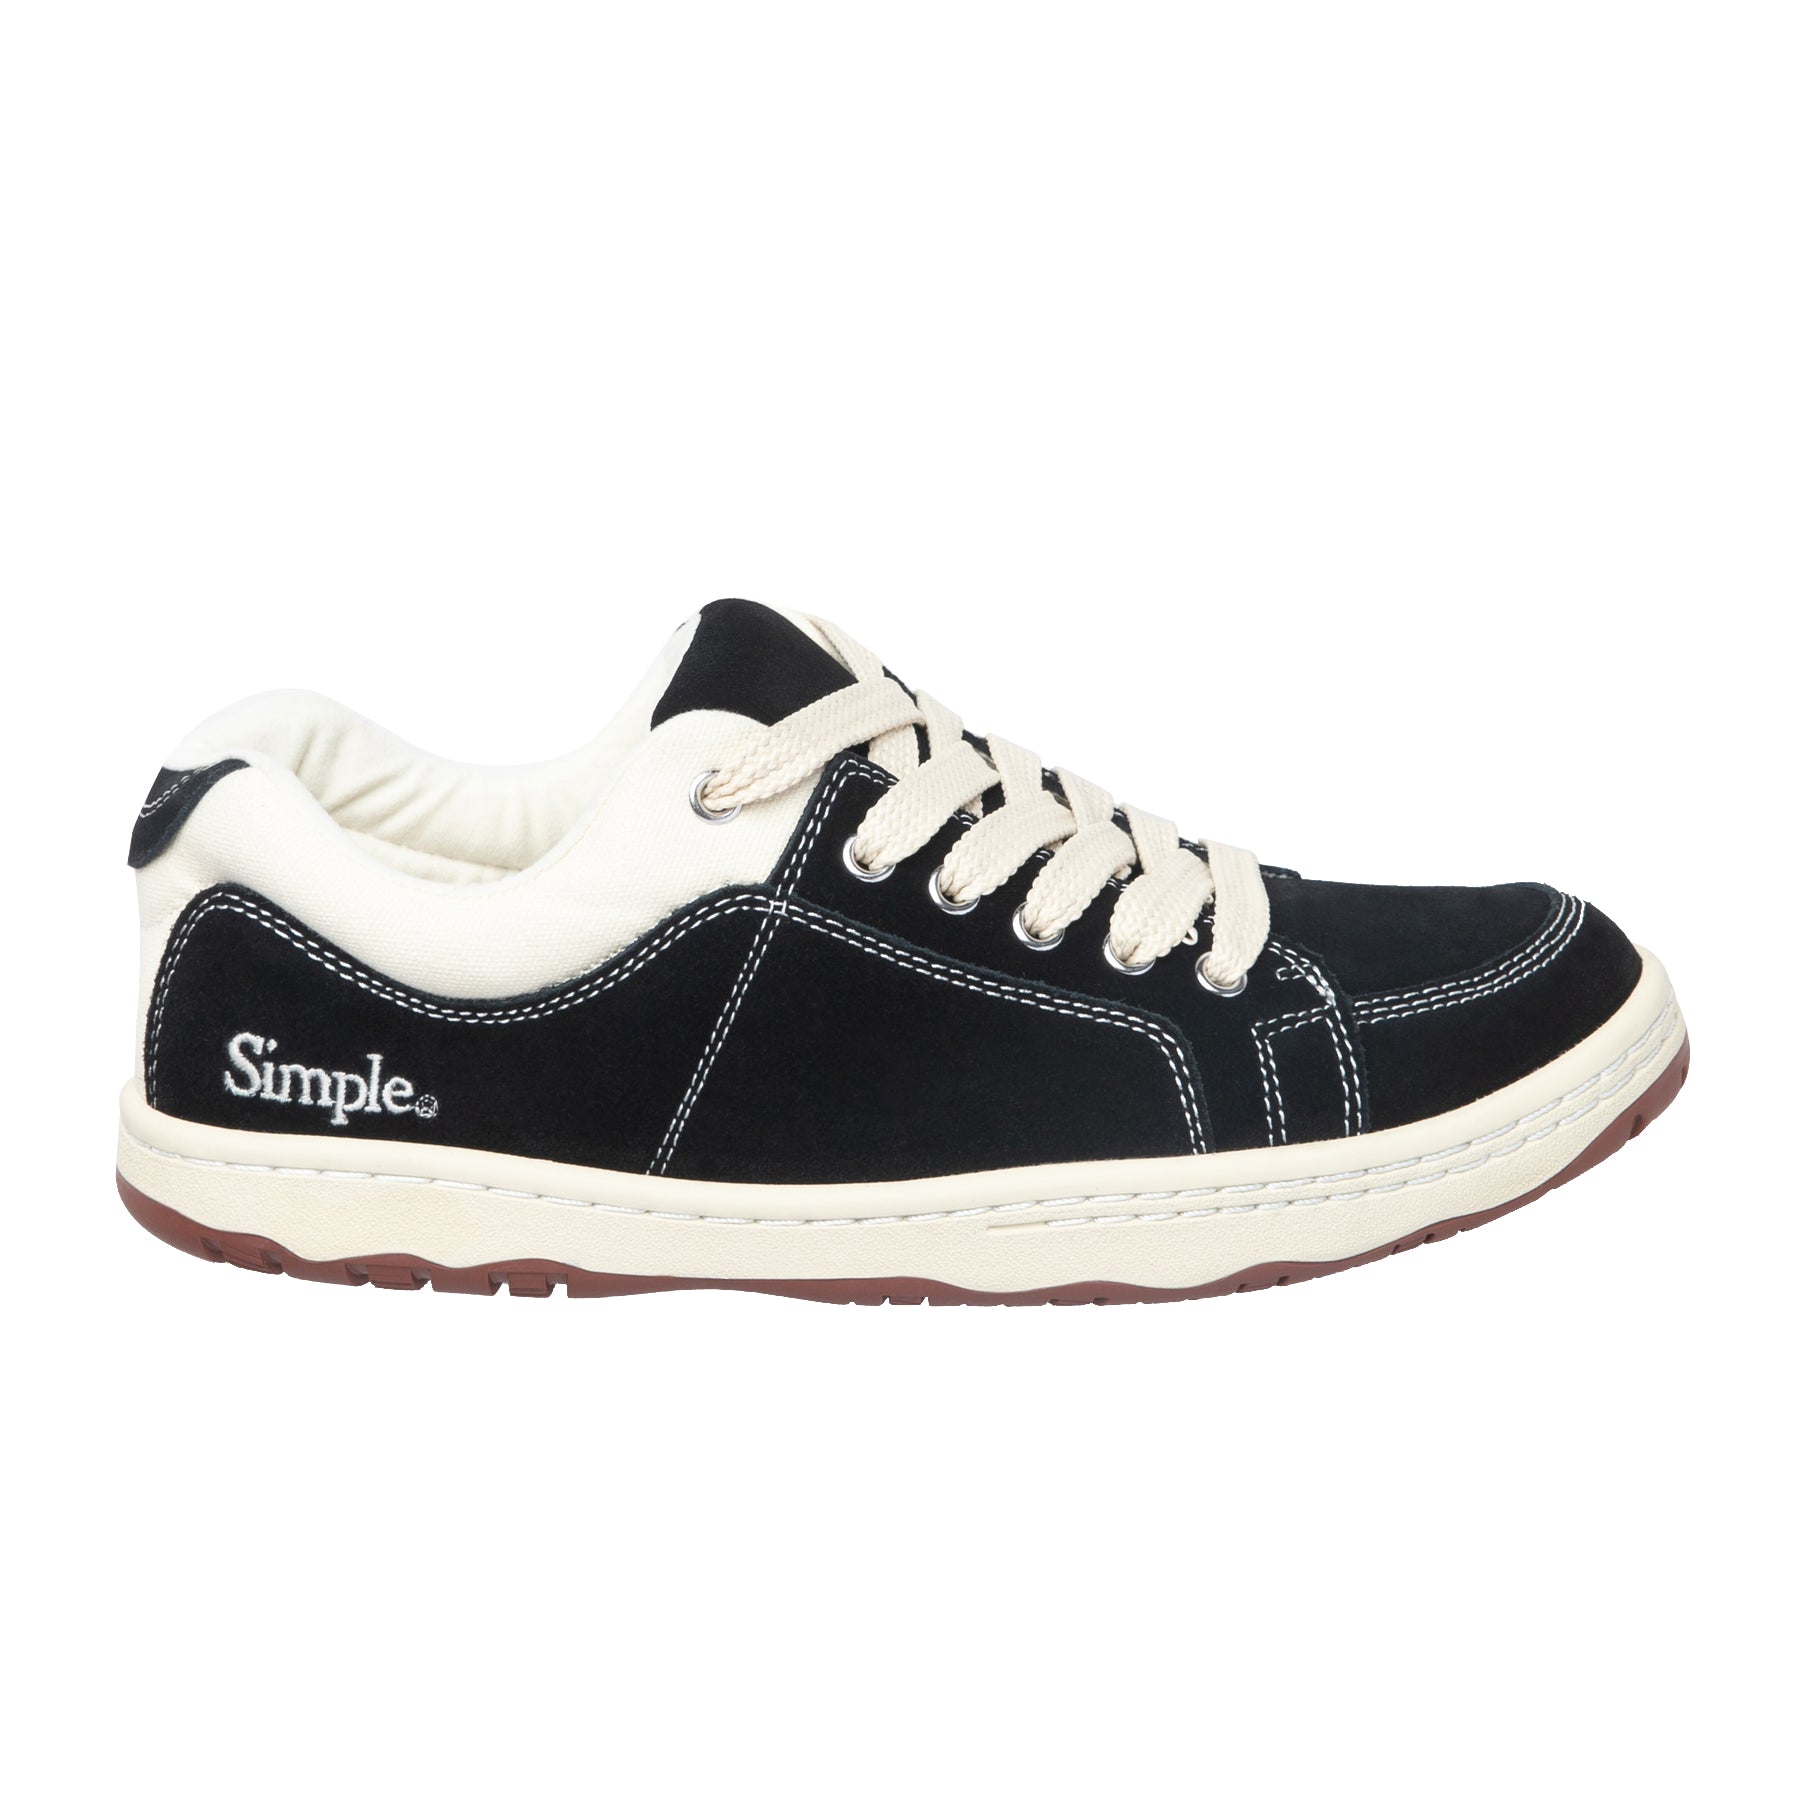 Simple OS Shoes Black 10.5